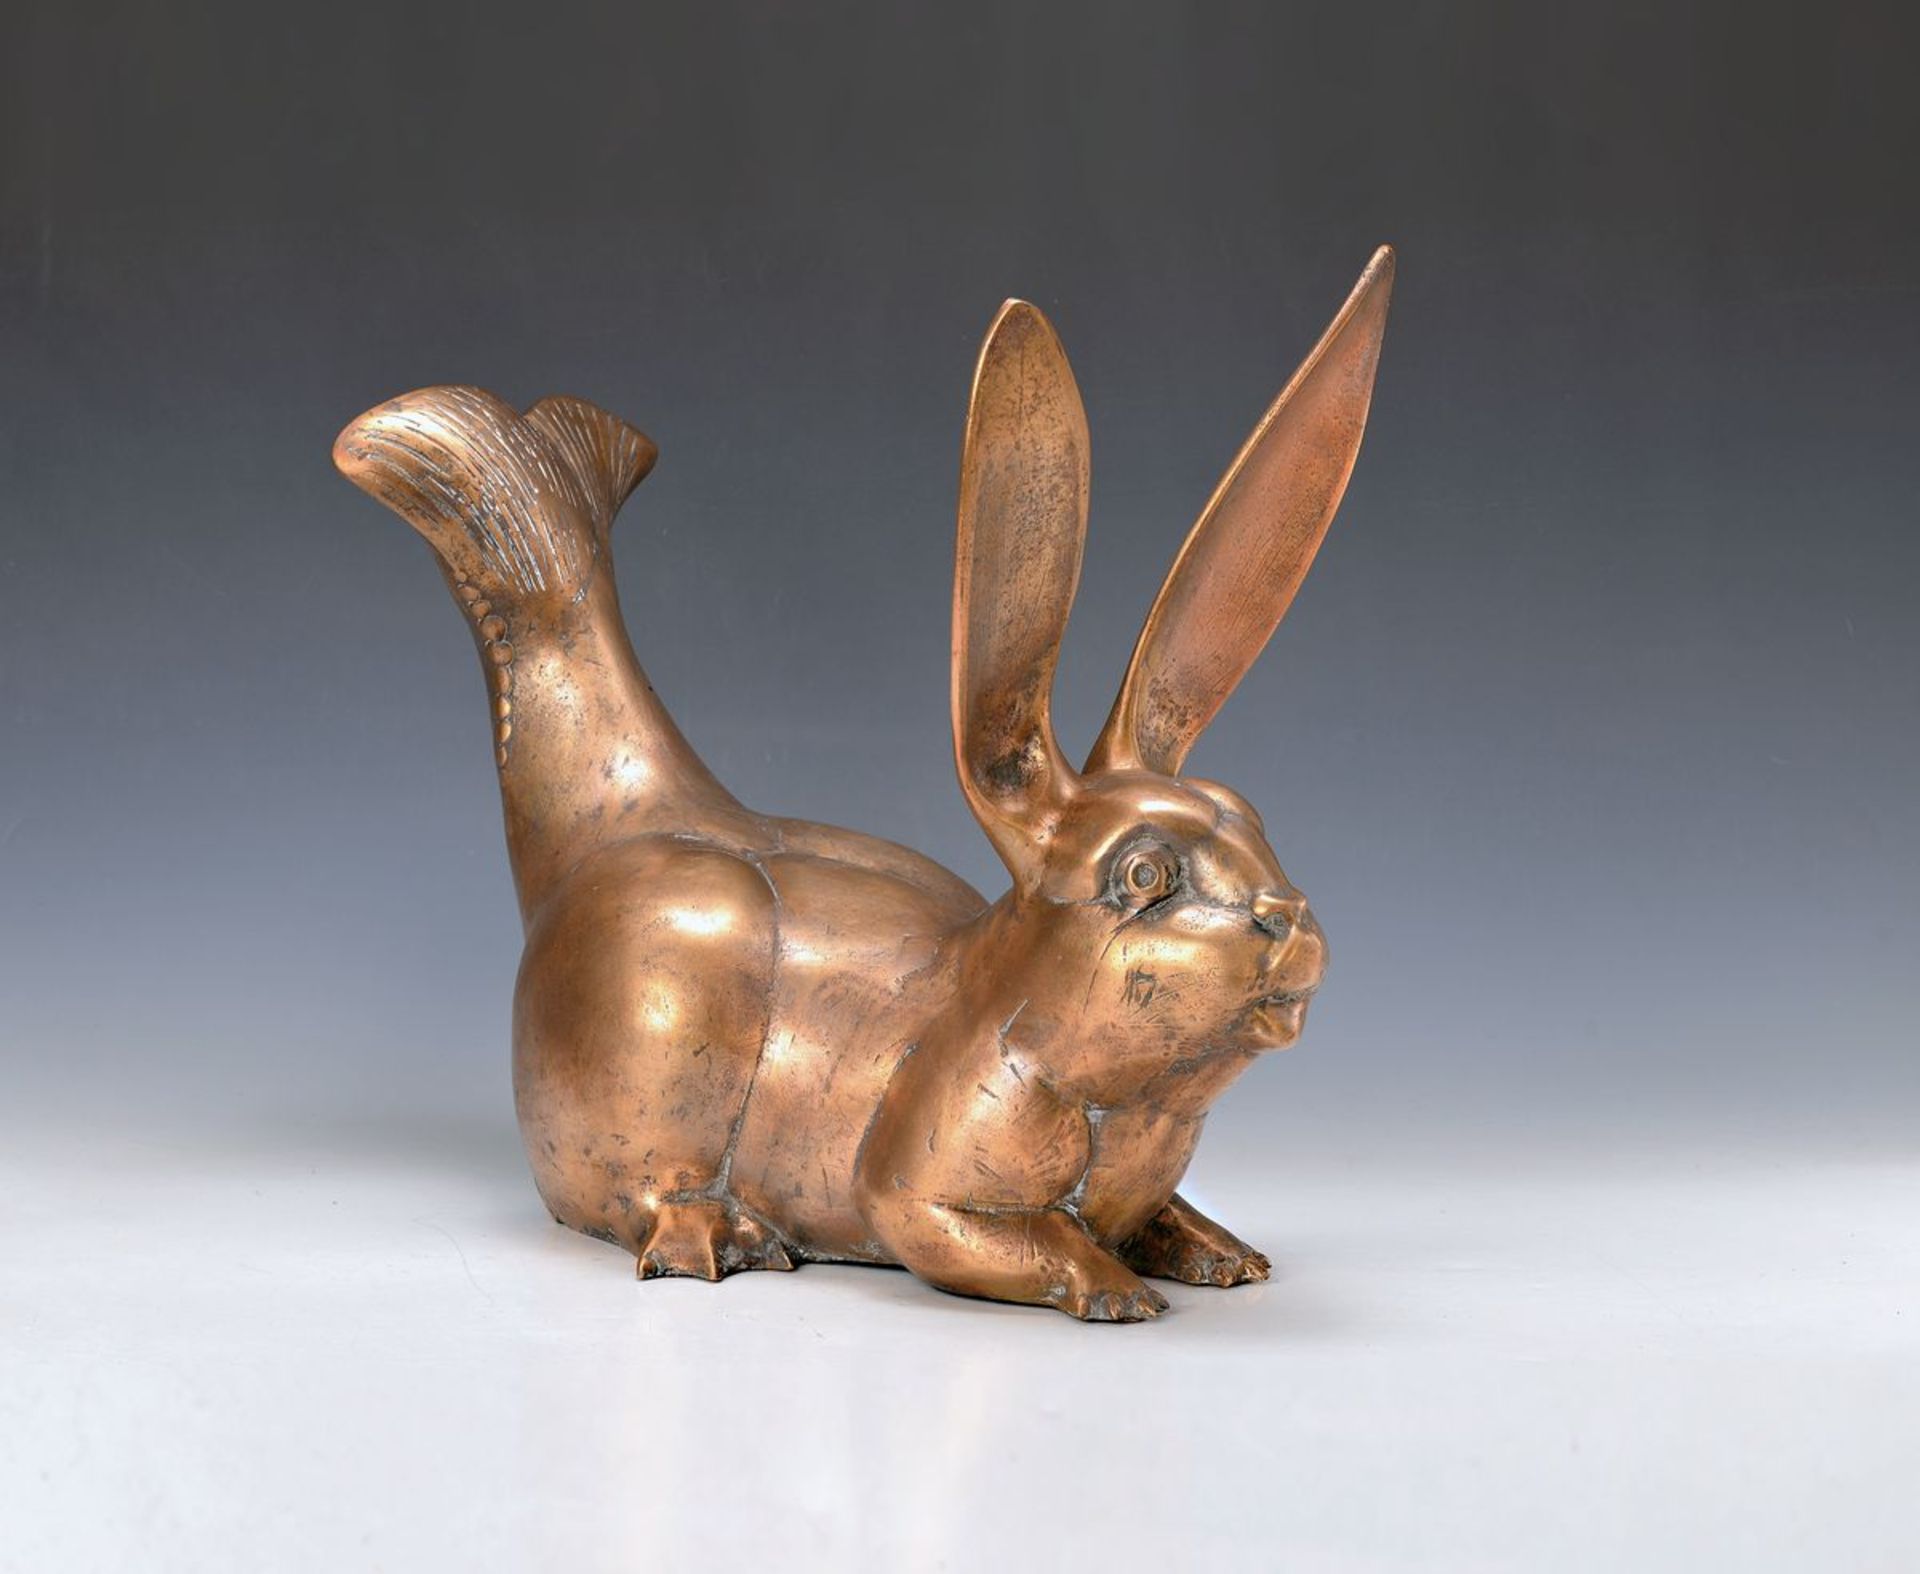 Gernot Rumpf, born 1941 Kaiserslautern, rabbit, large bronze sculpture, signed, foundry stamp,